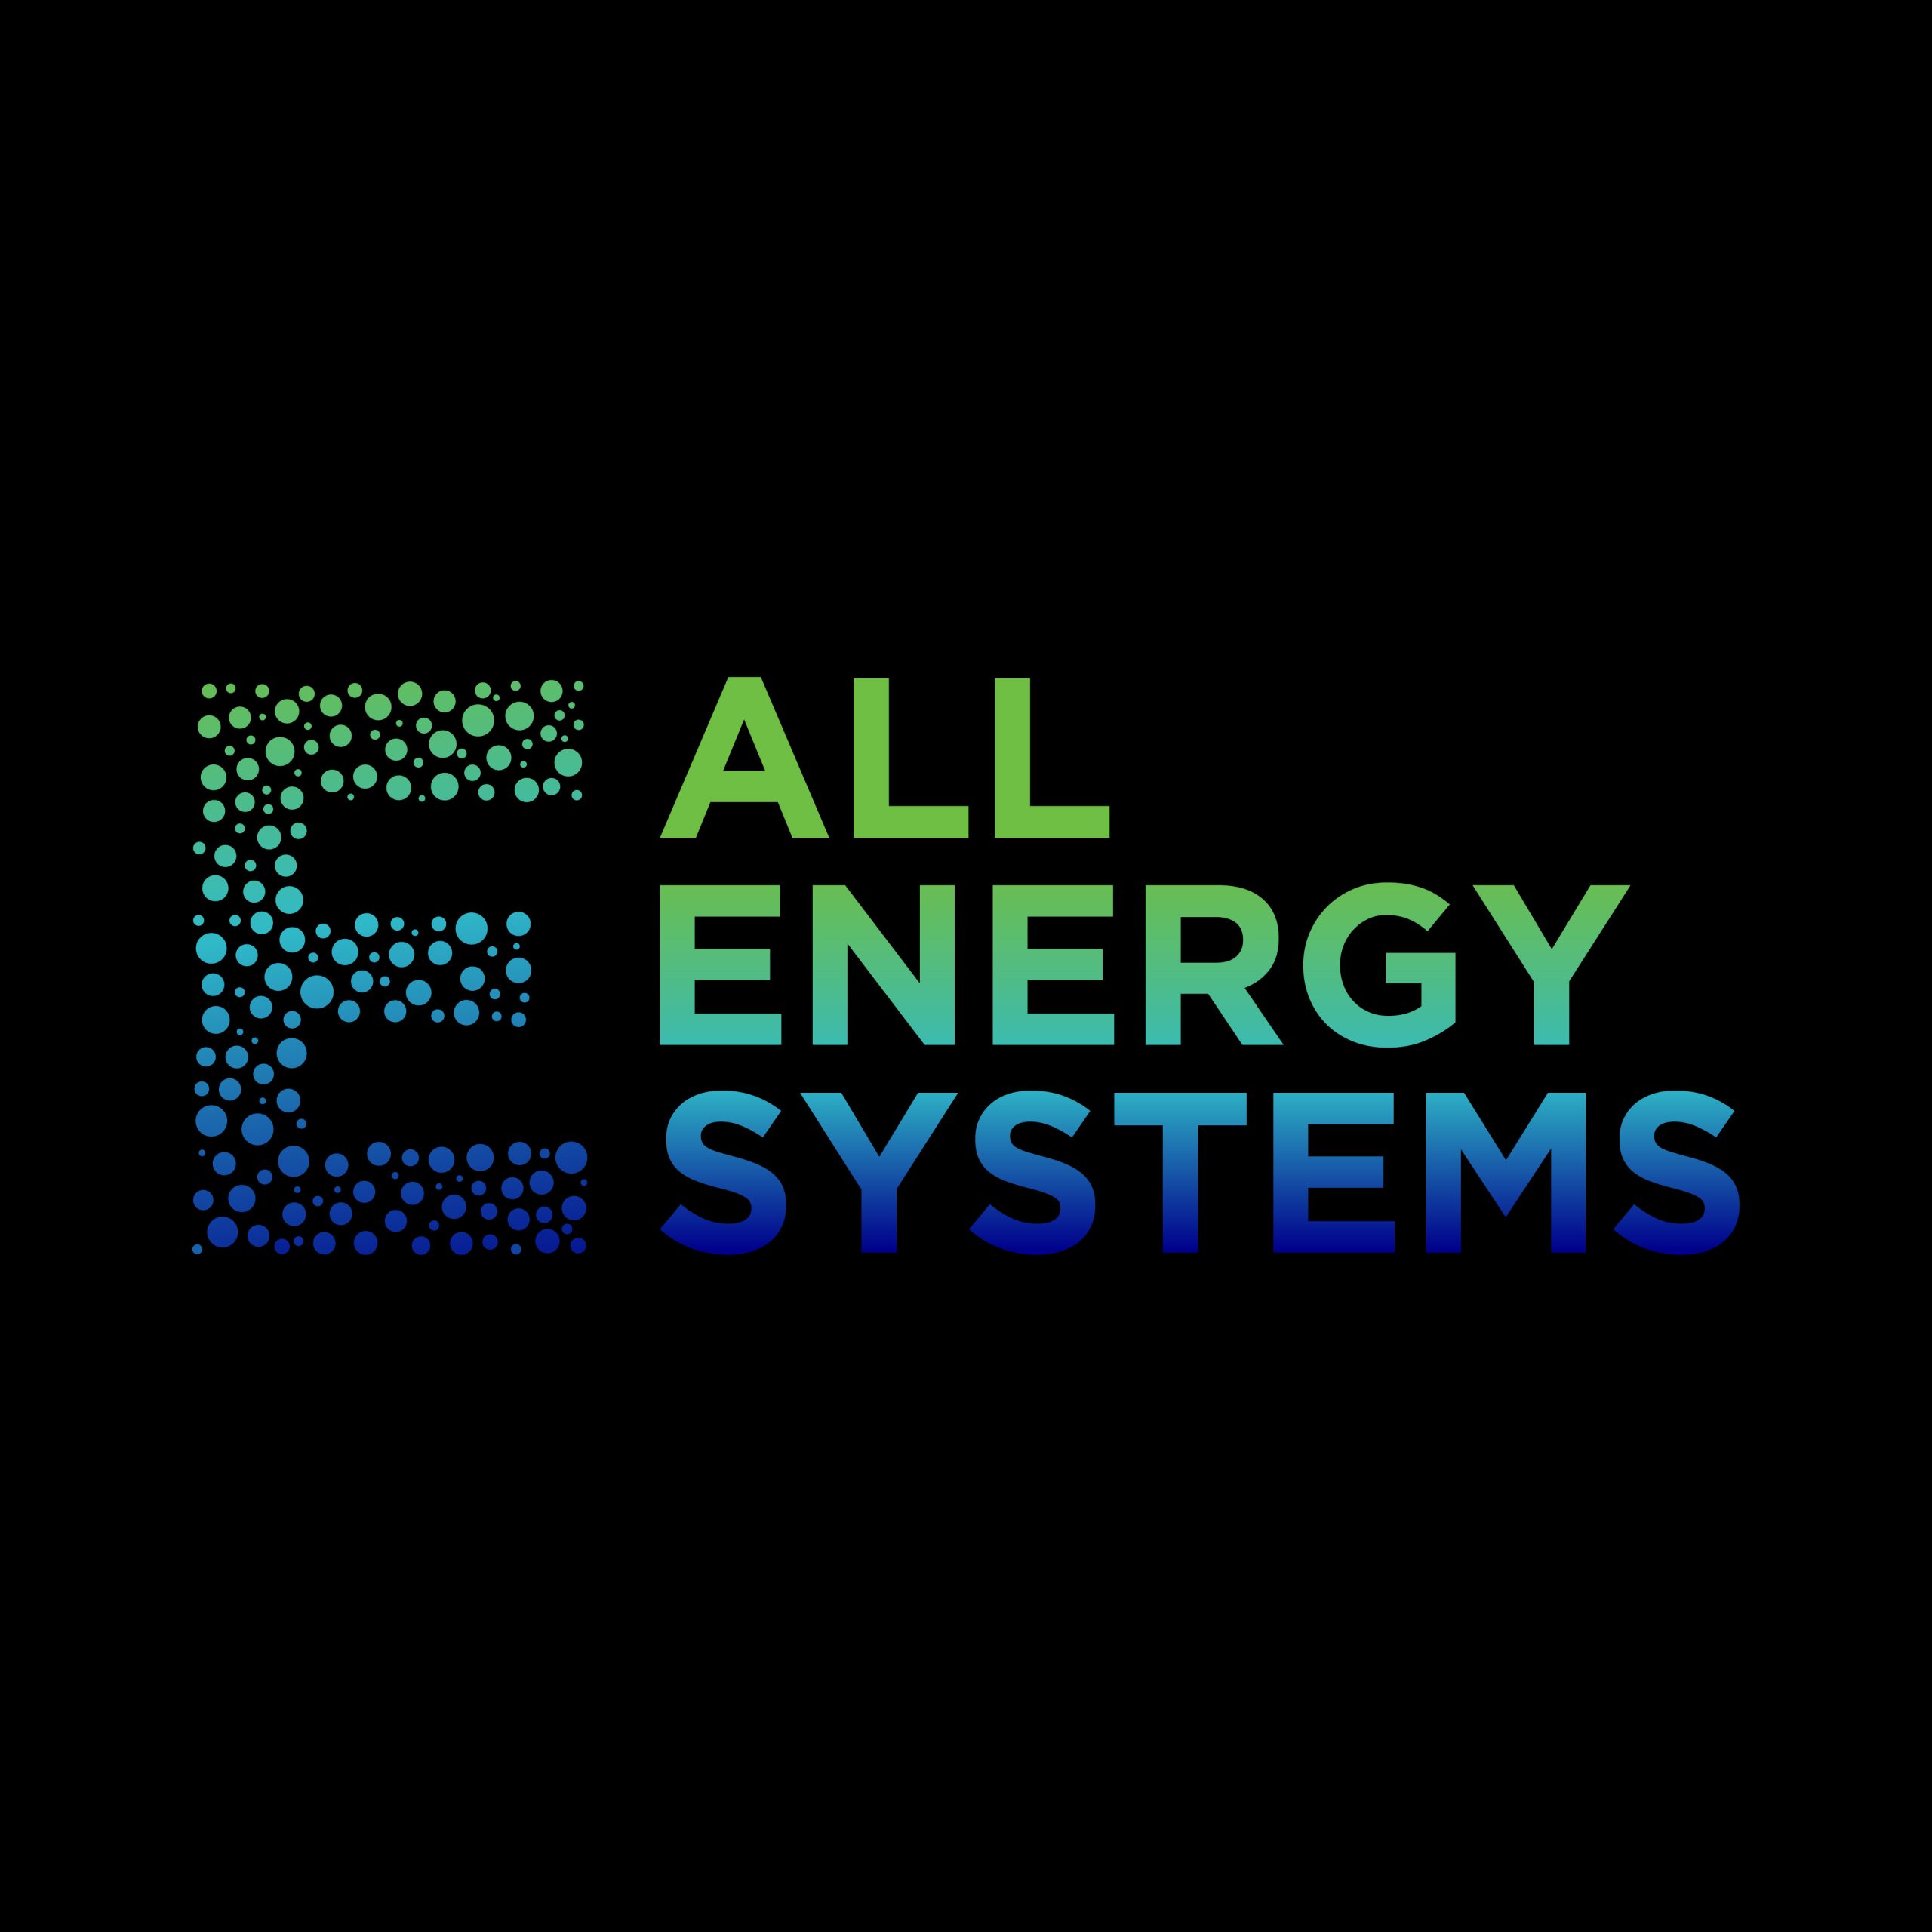 E-logo-design-for-All-Energy-Systems-Black-Background-2-scaled.jpg